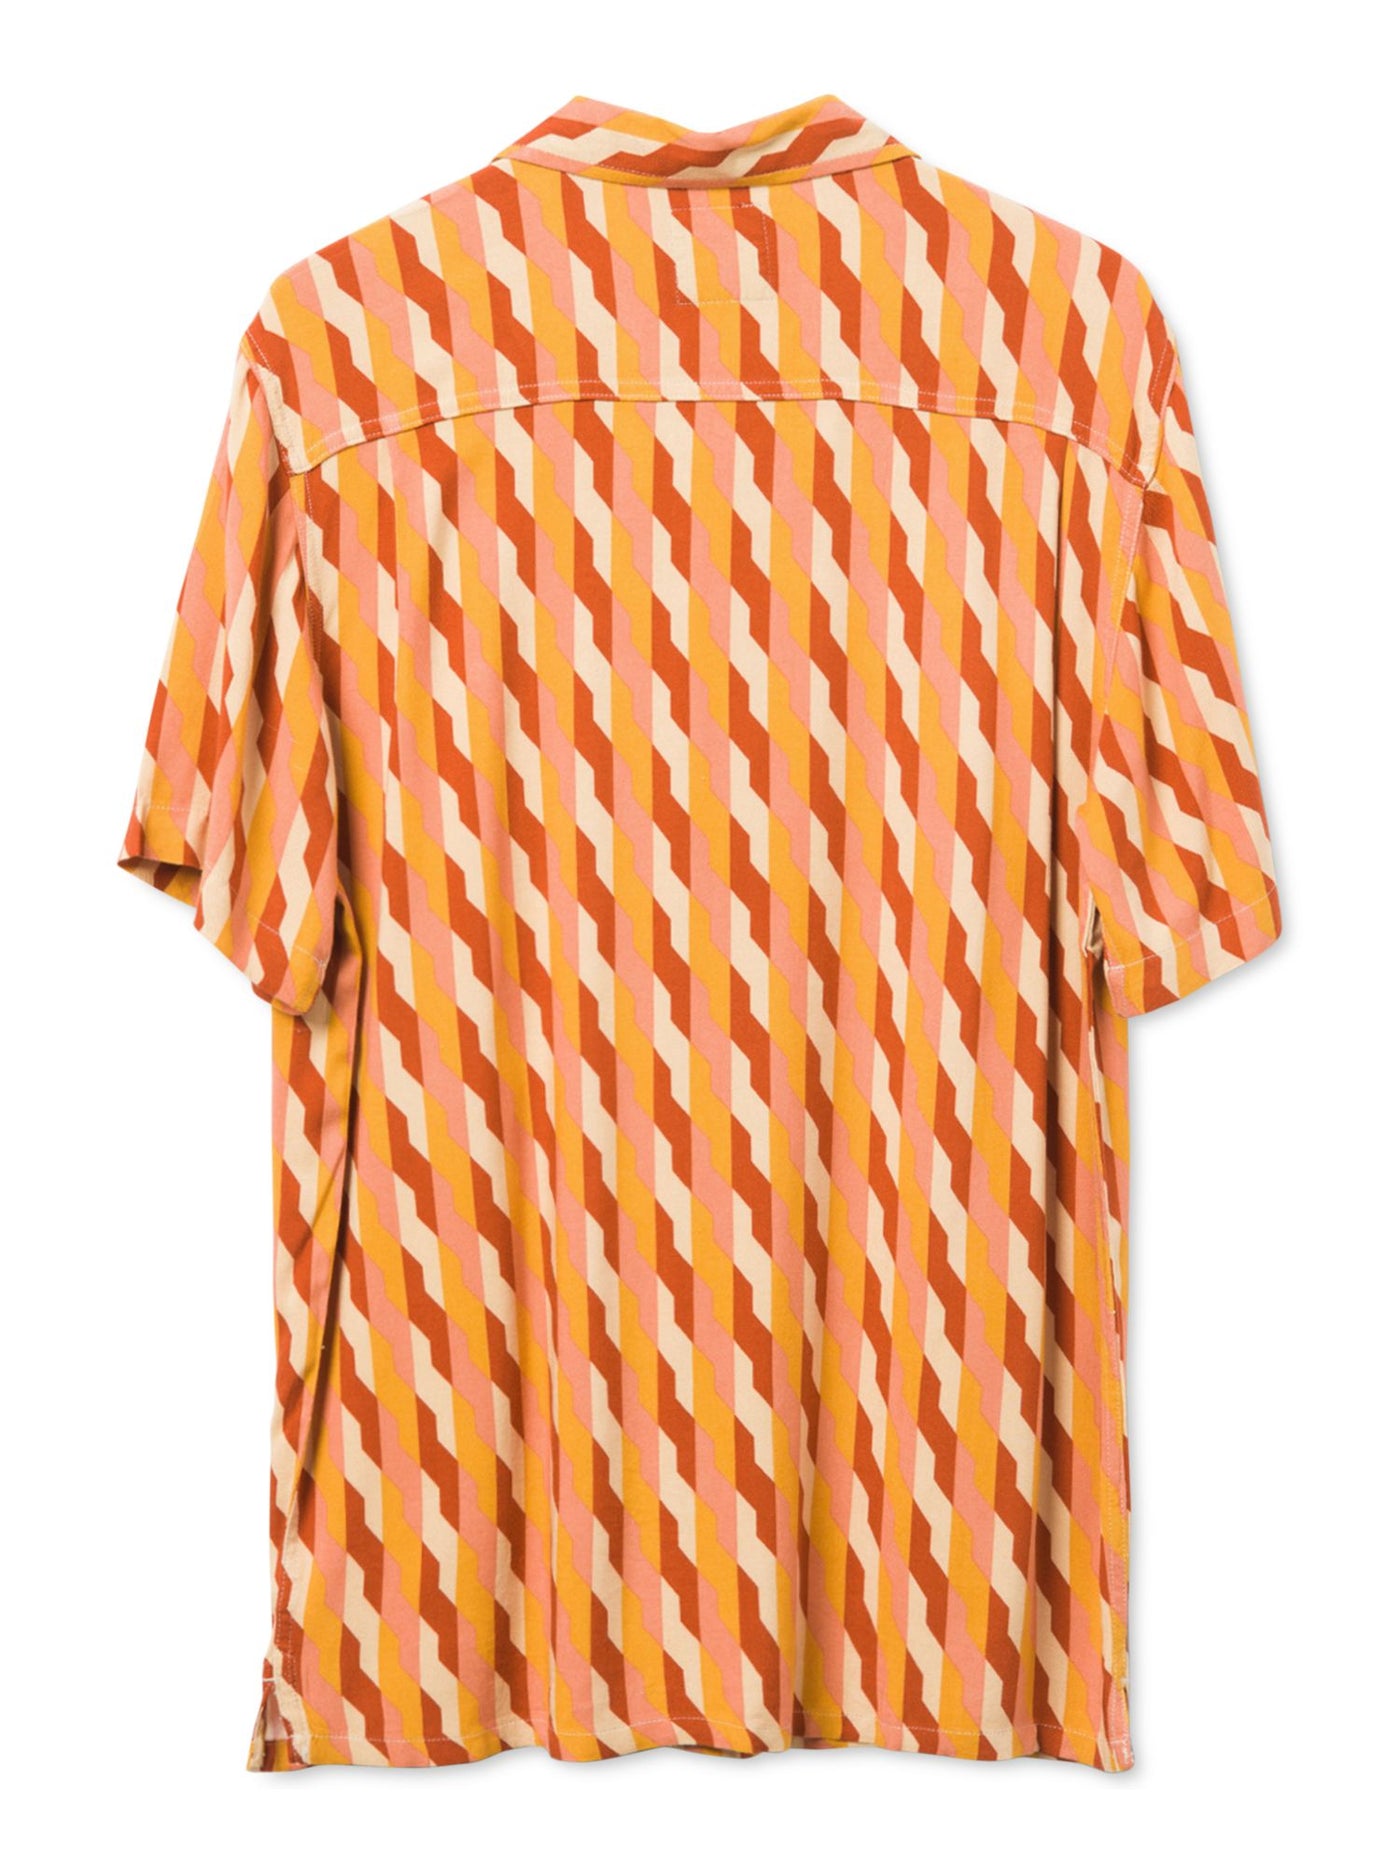 JUNK FOOD Mens Alexei Orange Geometric Short Sleeve Button Down Casual Shirt XL